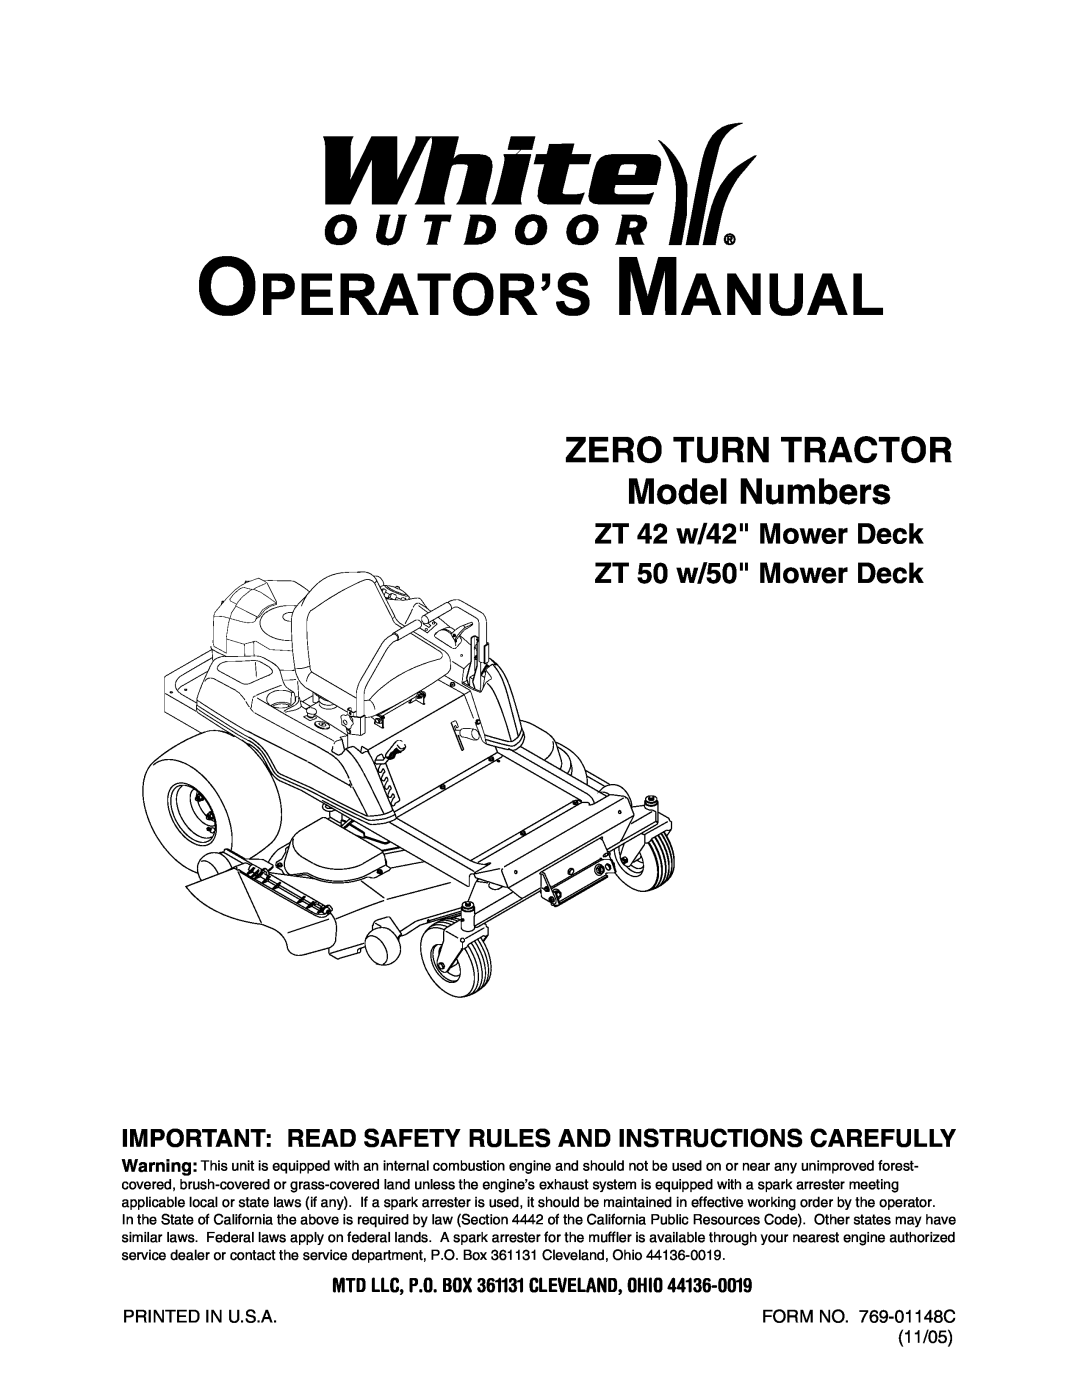 MTD manual ZT 42 w/42 Mower Deck ZT 50 w/50 Mower Deck, Operator’S Manual, ZERO TURN TRACTOR Model Numbers 